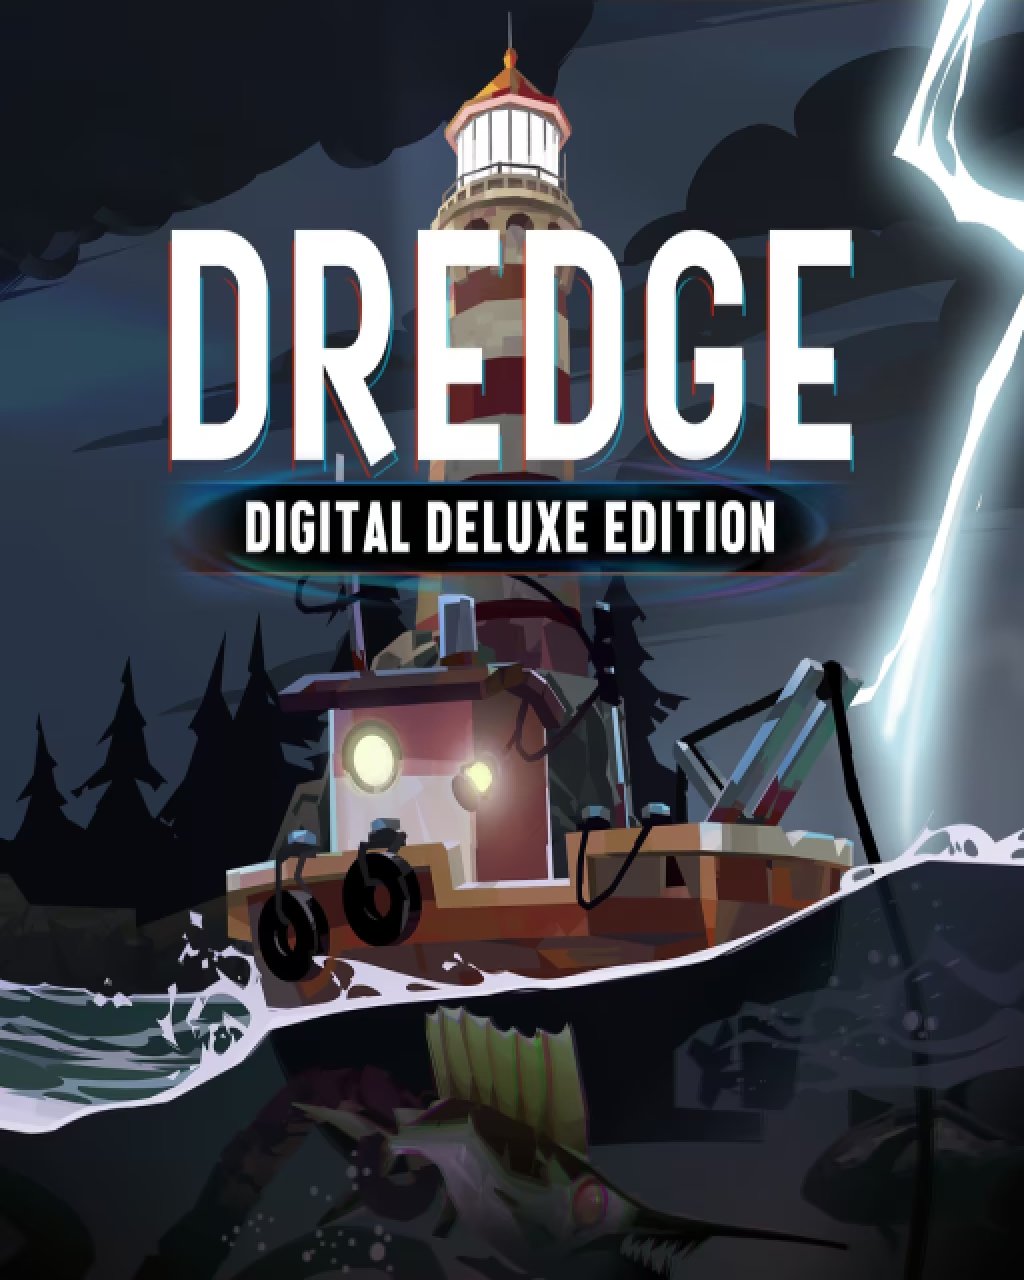 DREDGE Digital Deluxe Edition